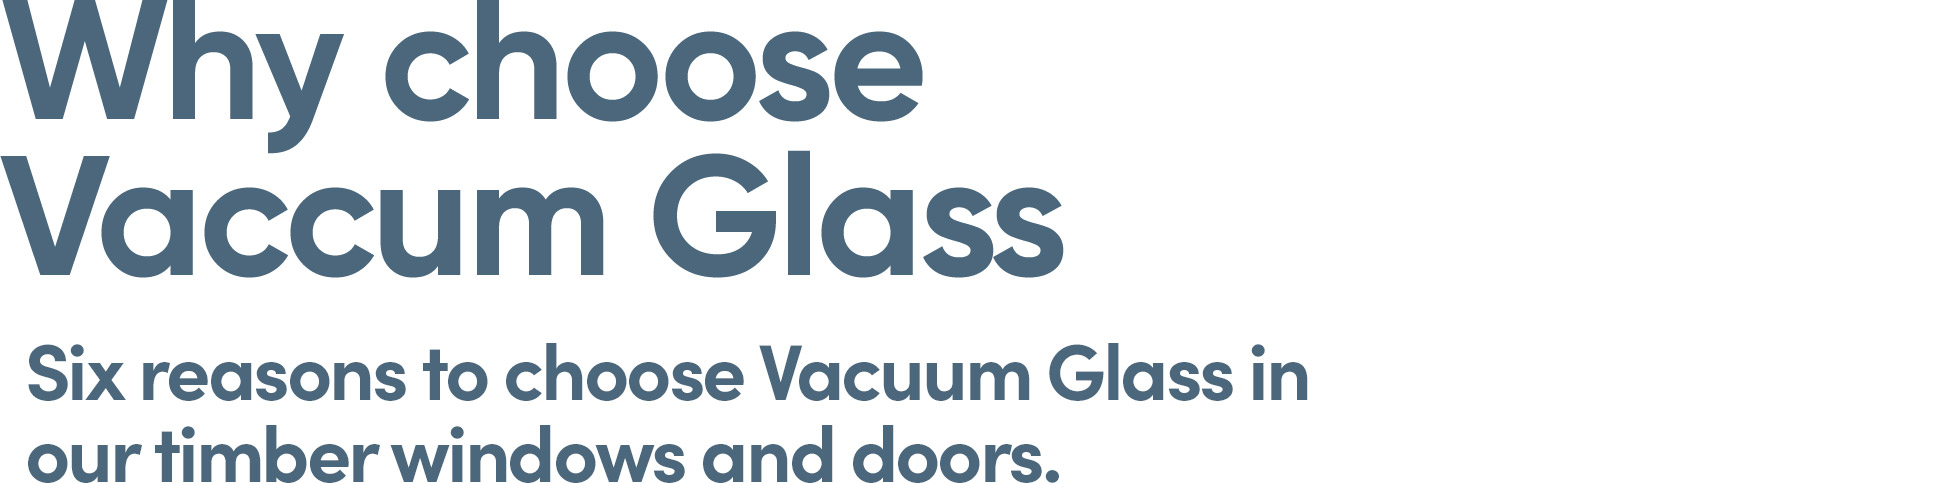 Why Choose Vacuum Glass?